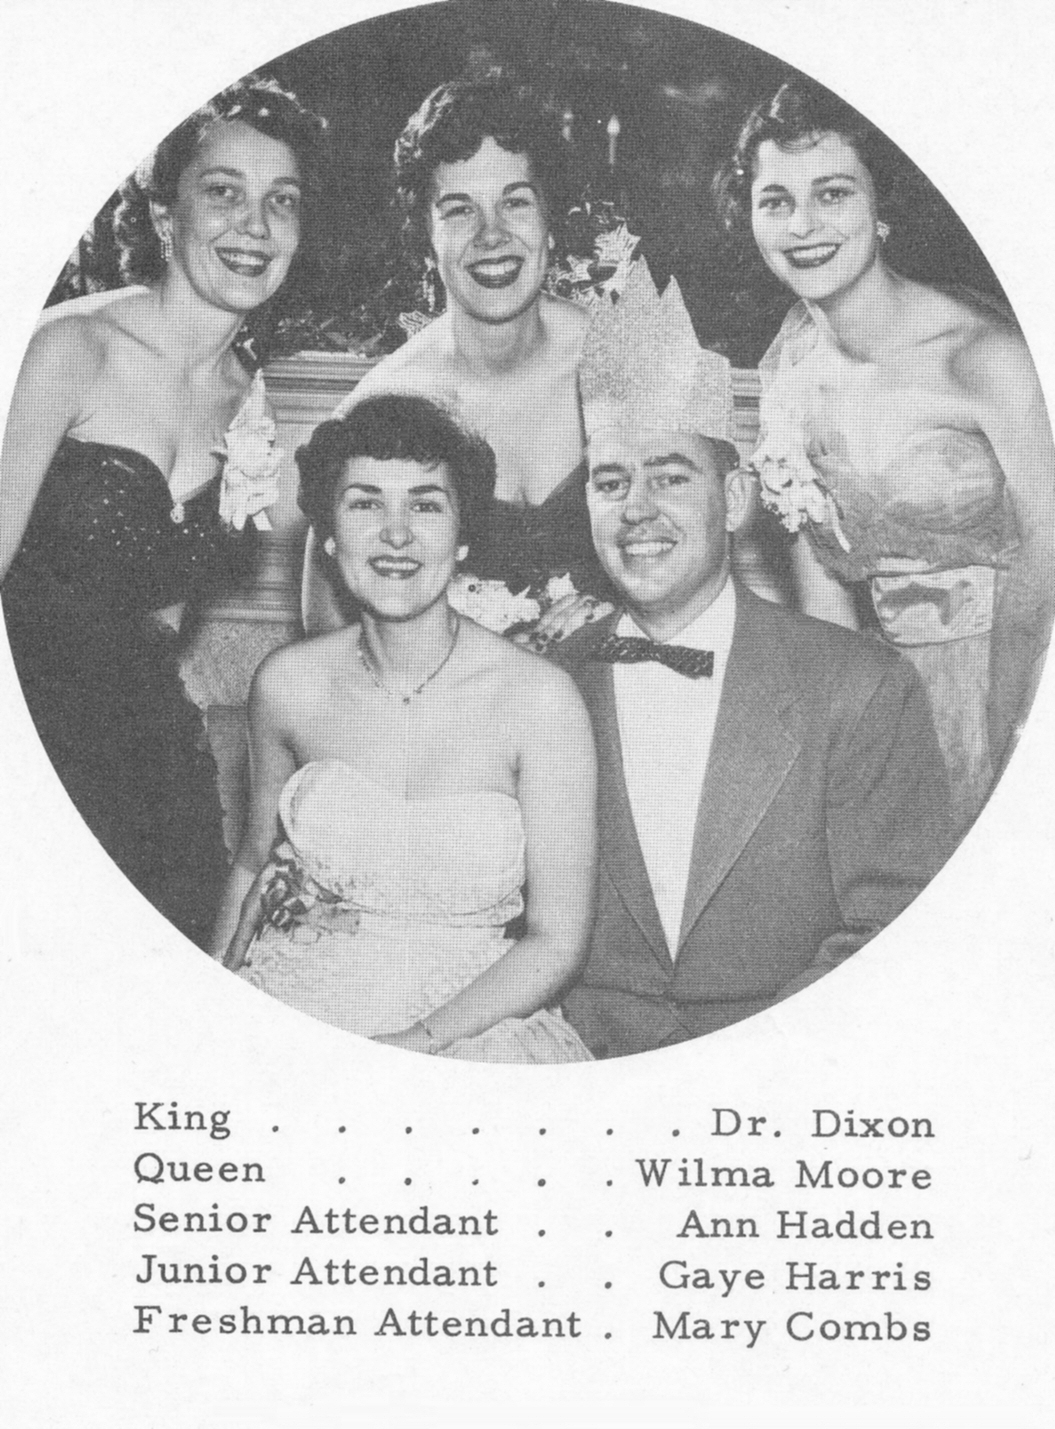 Dr. Dixon at Hospital Christmas Dance, KY, 1955